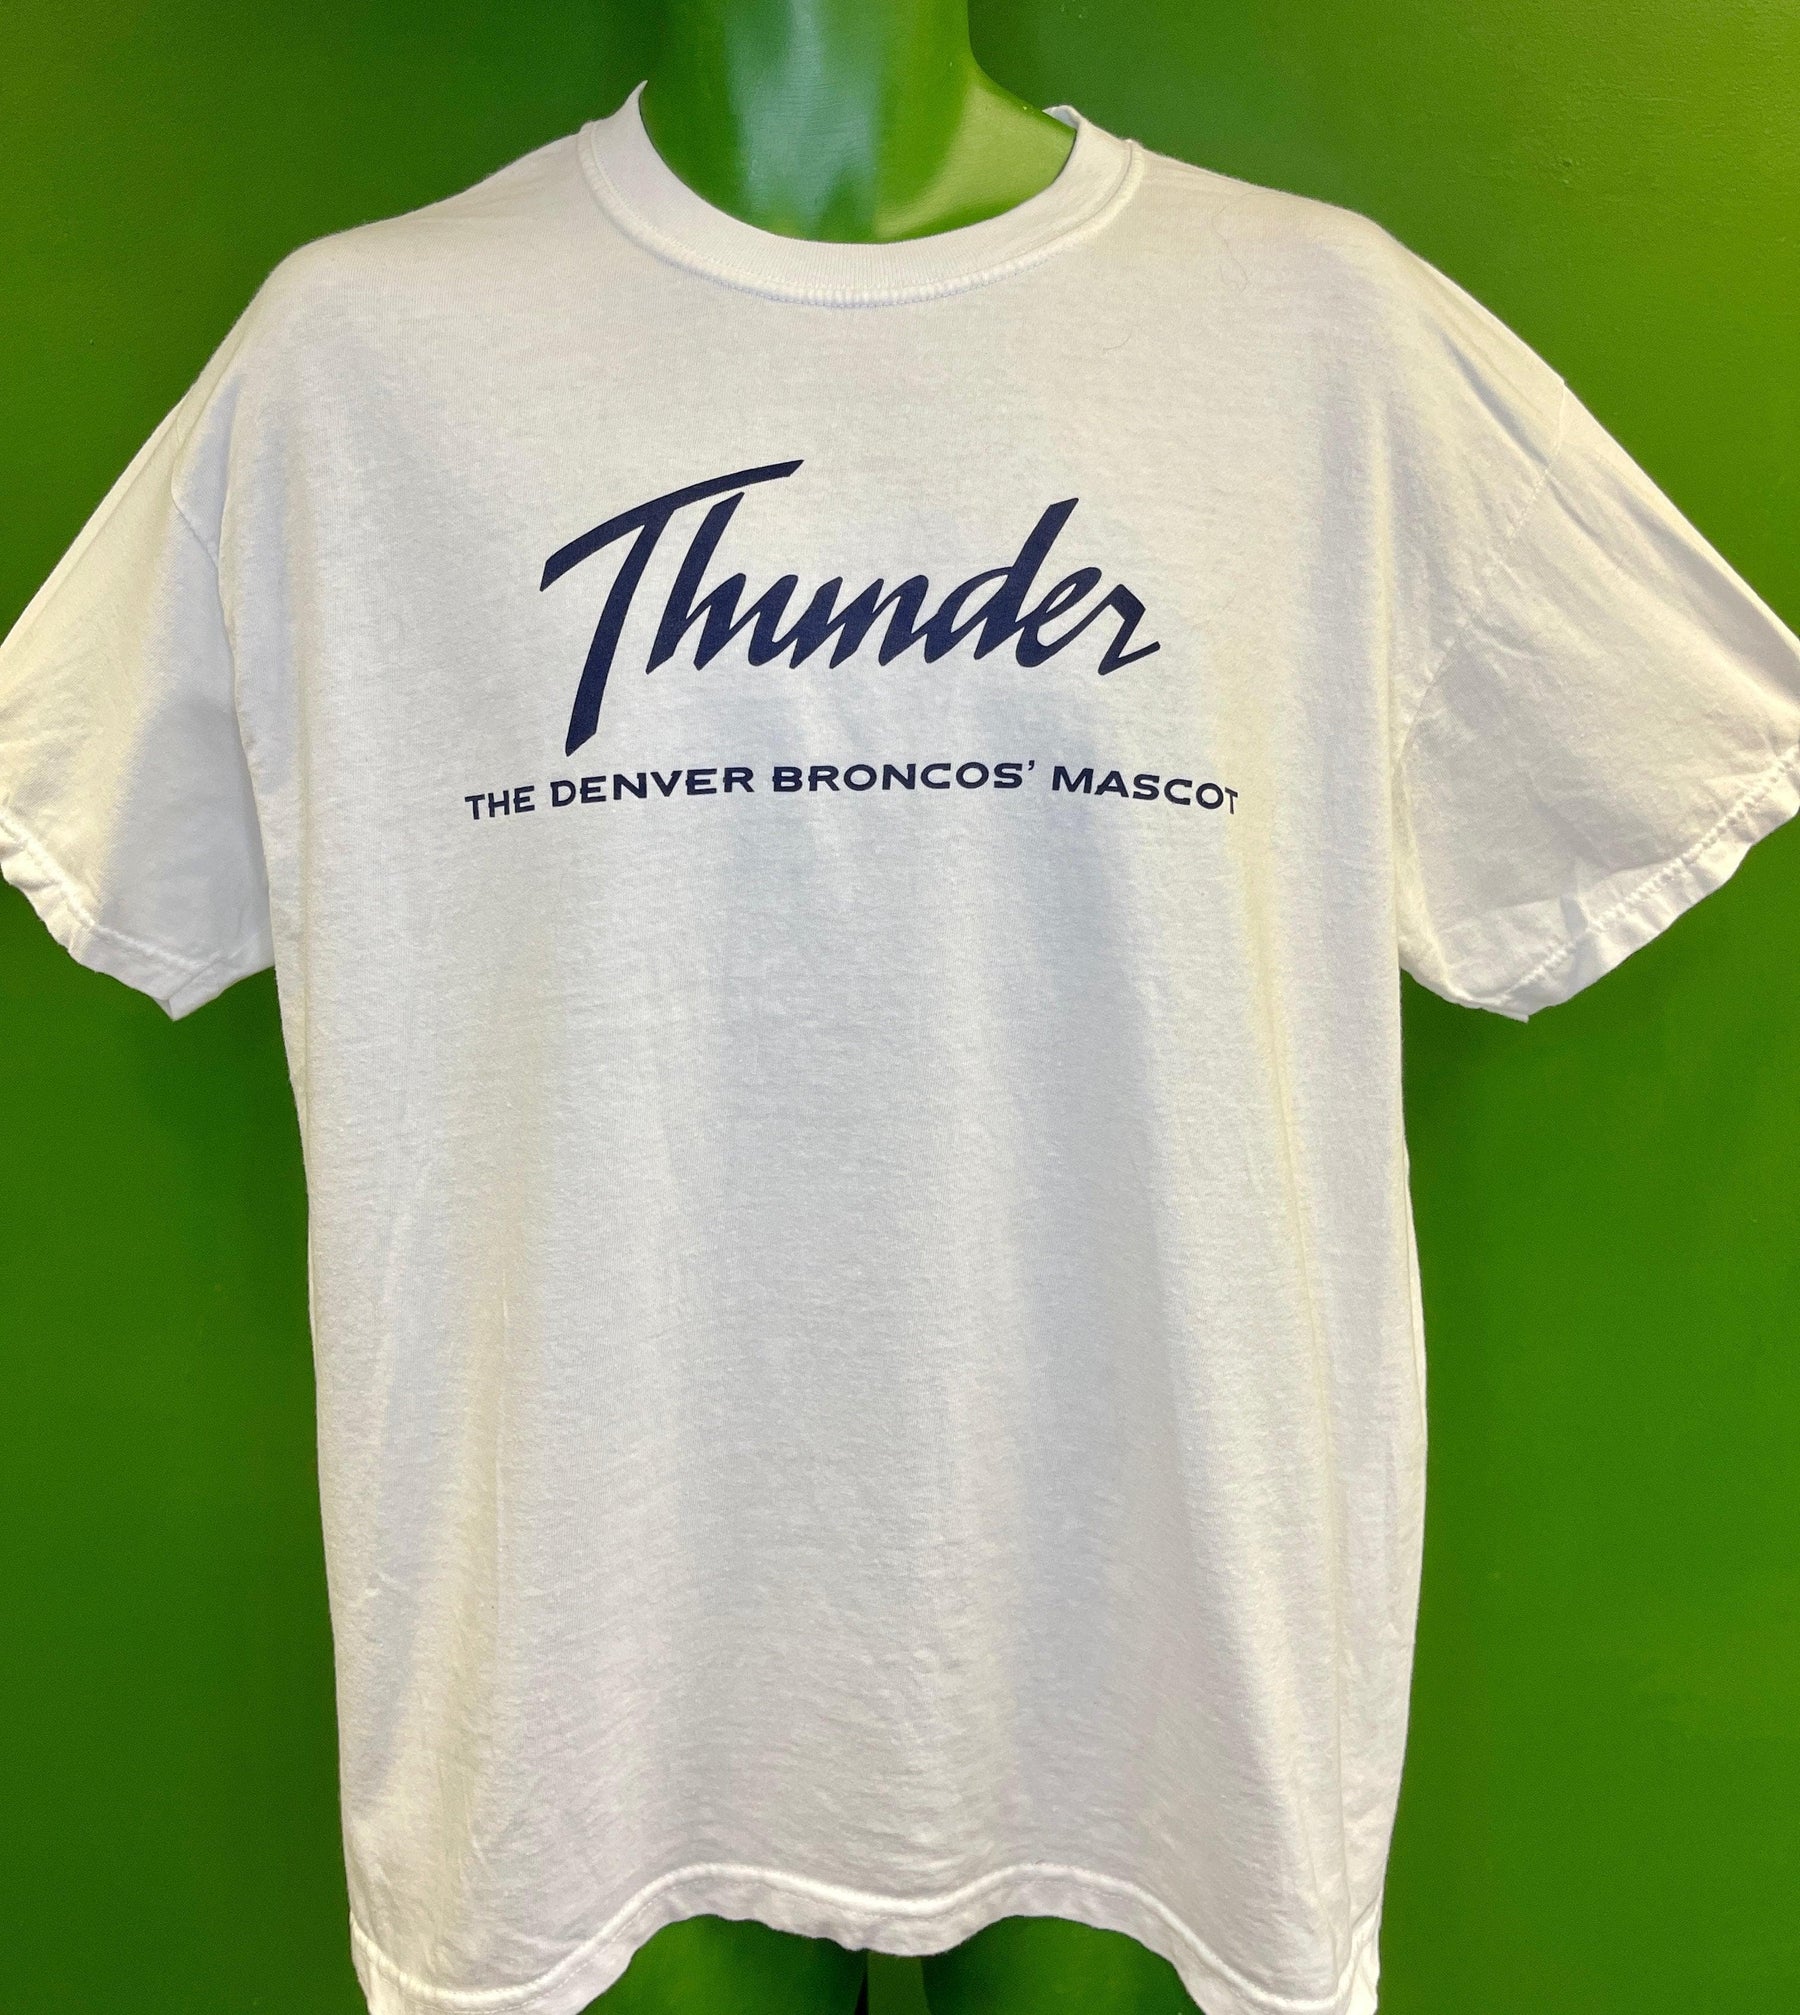 NFL Denver Broncos "Thunder" Mascot Cotton T-Shirt Unisex Large